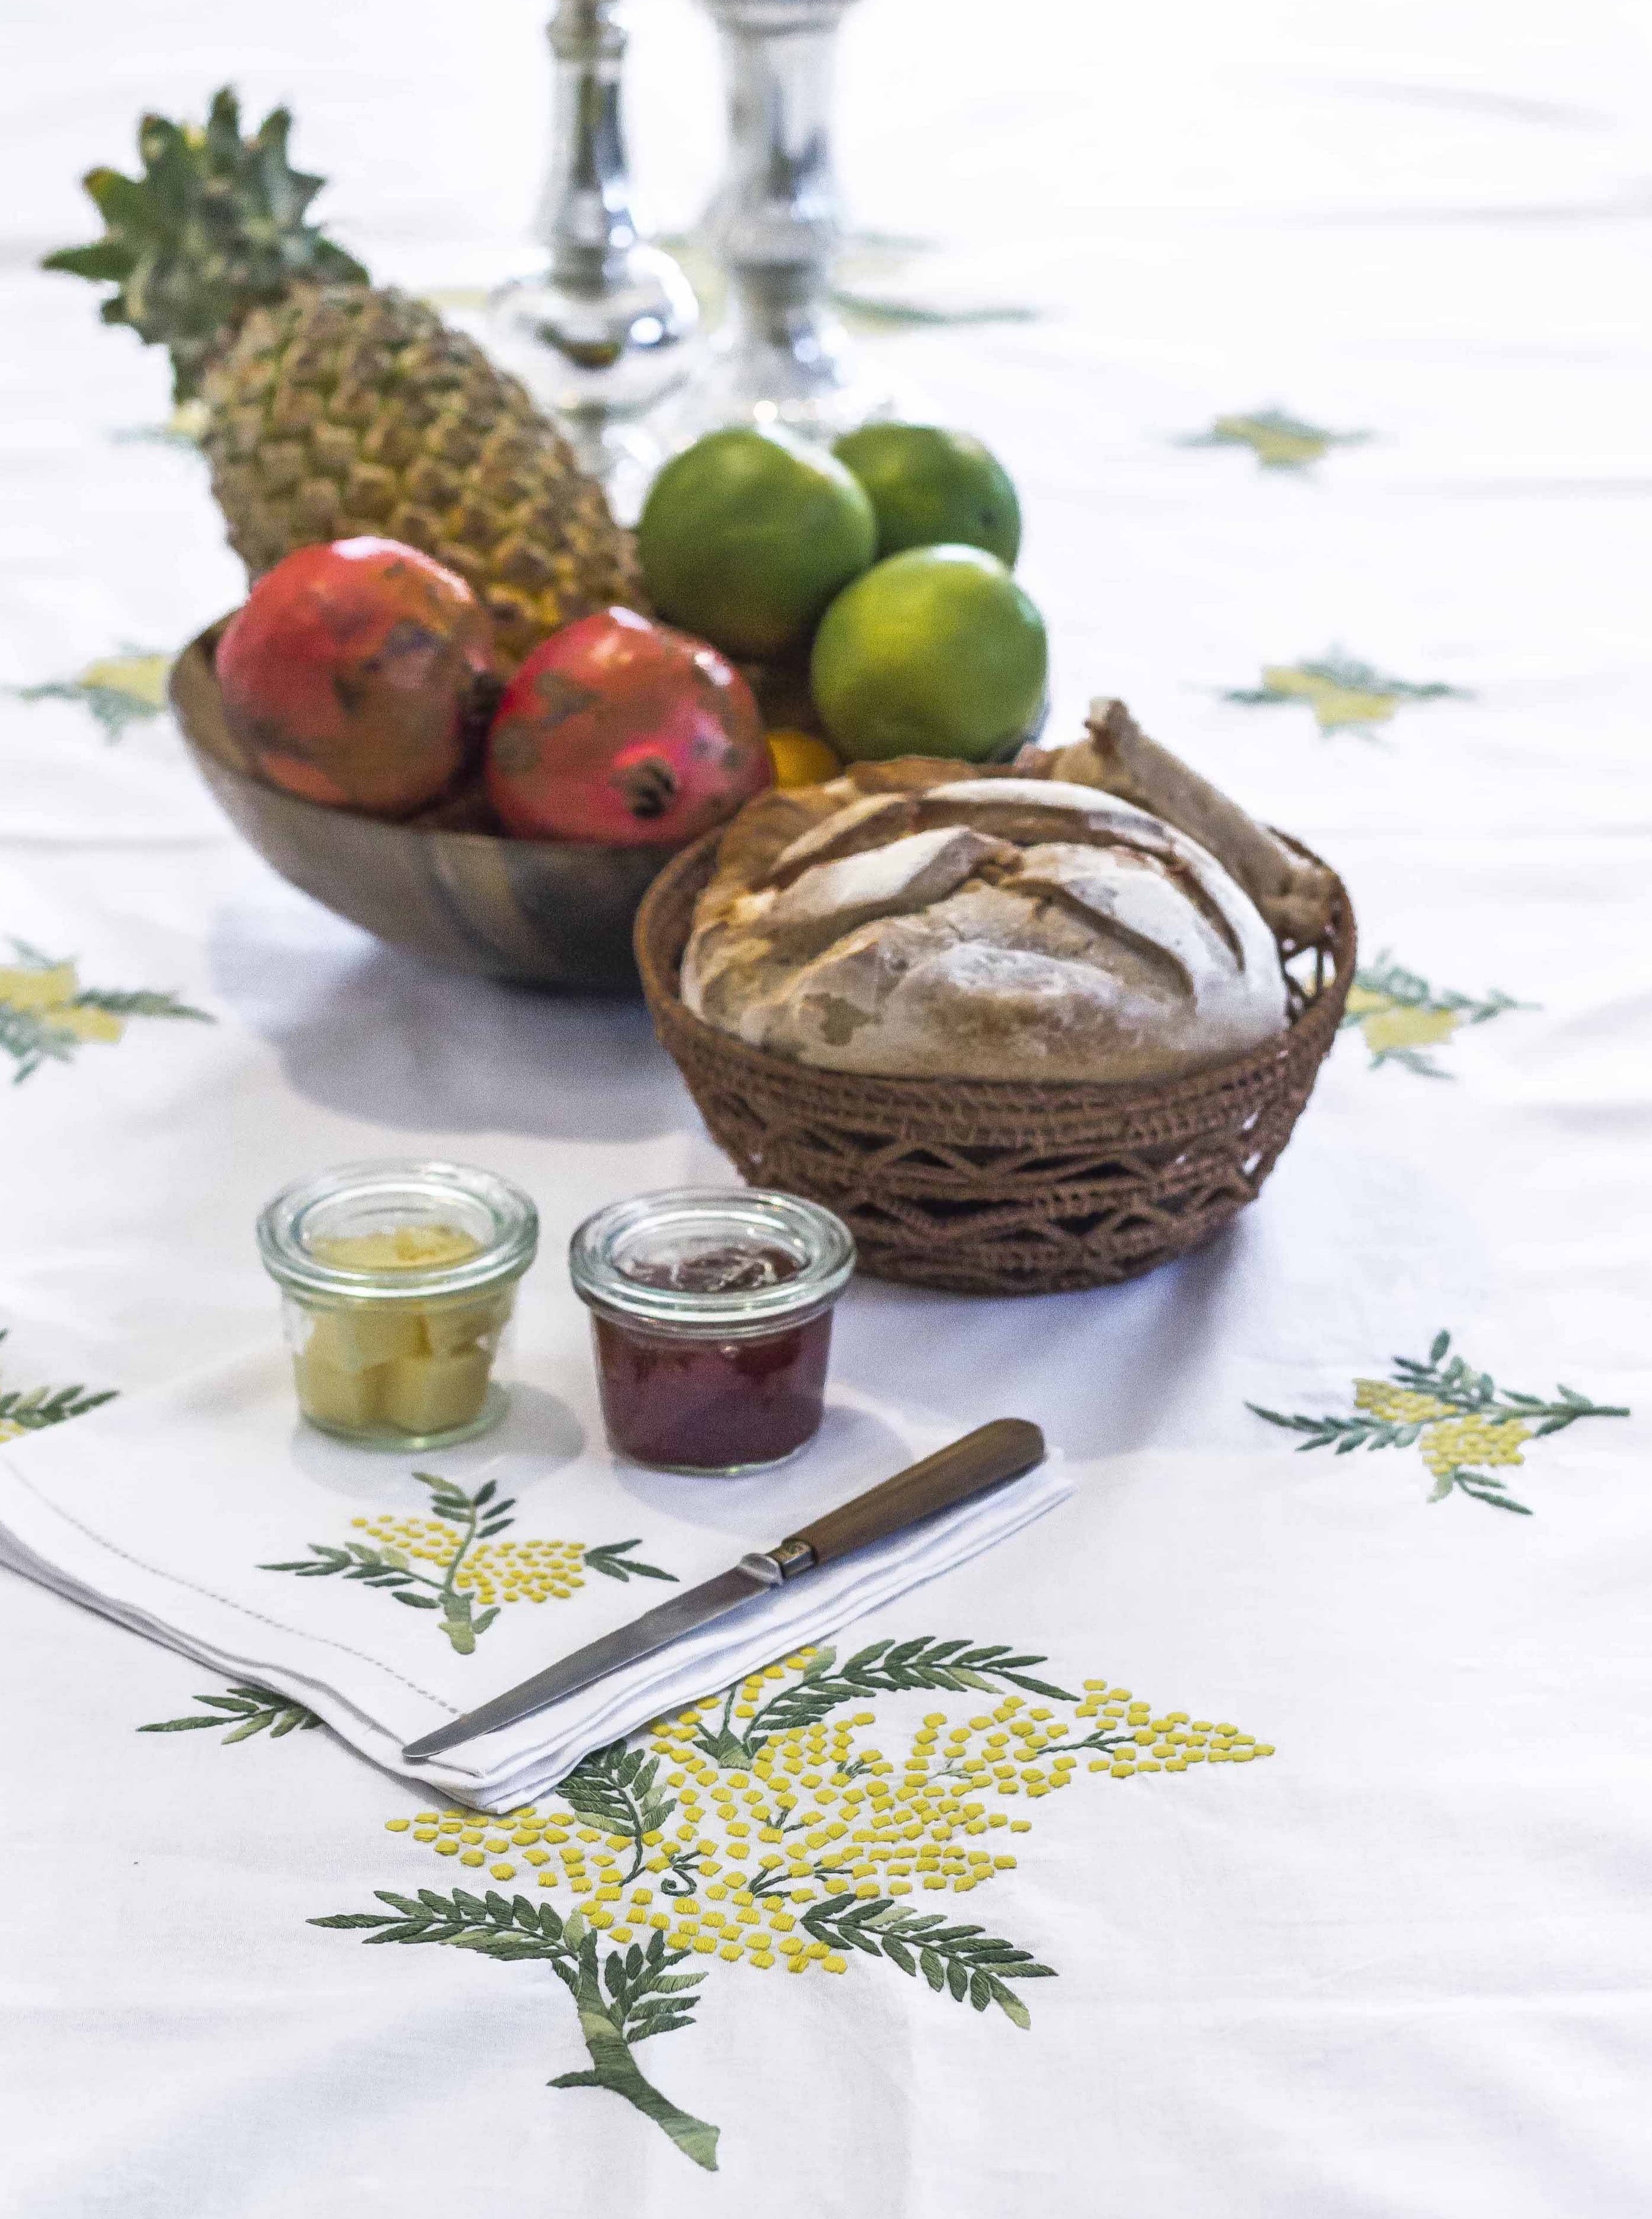 Tablecloth Mimosa